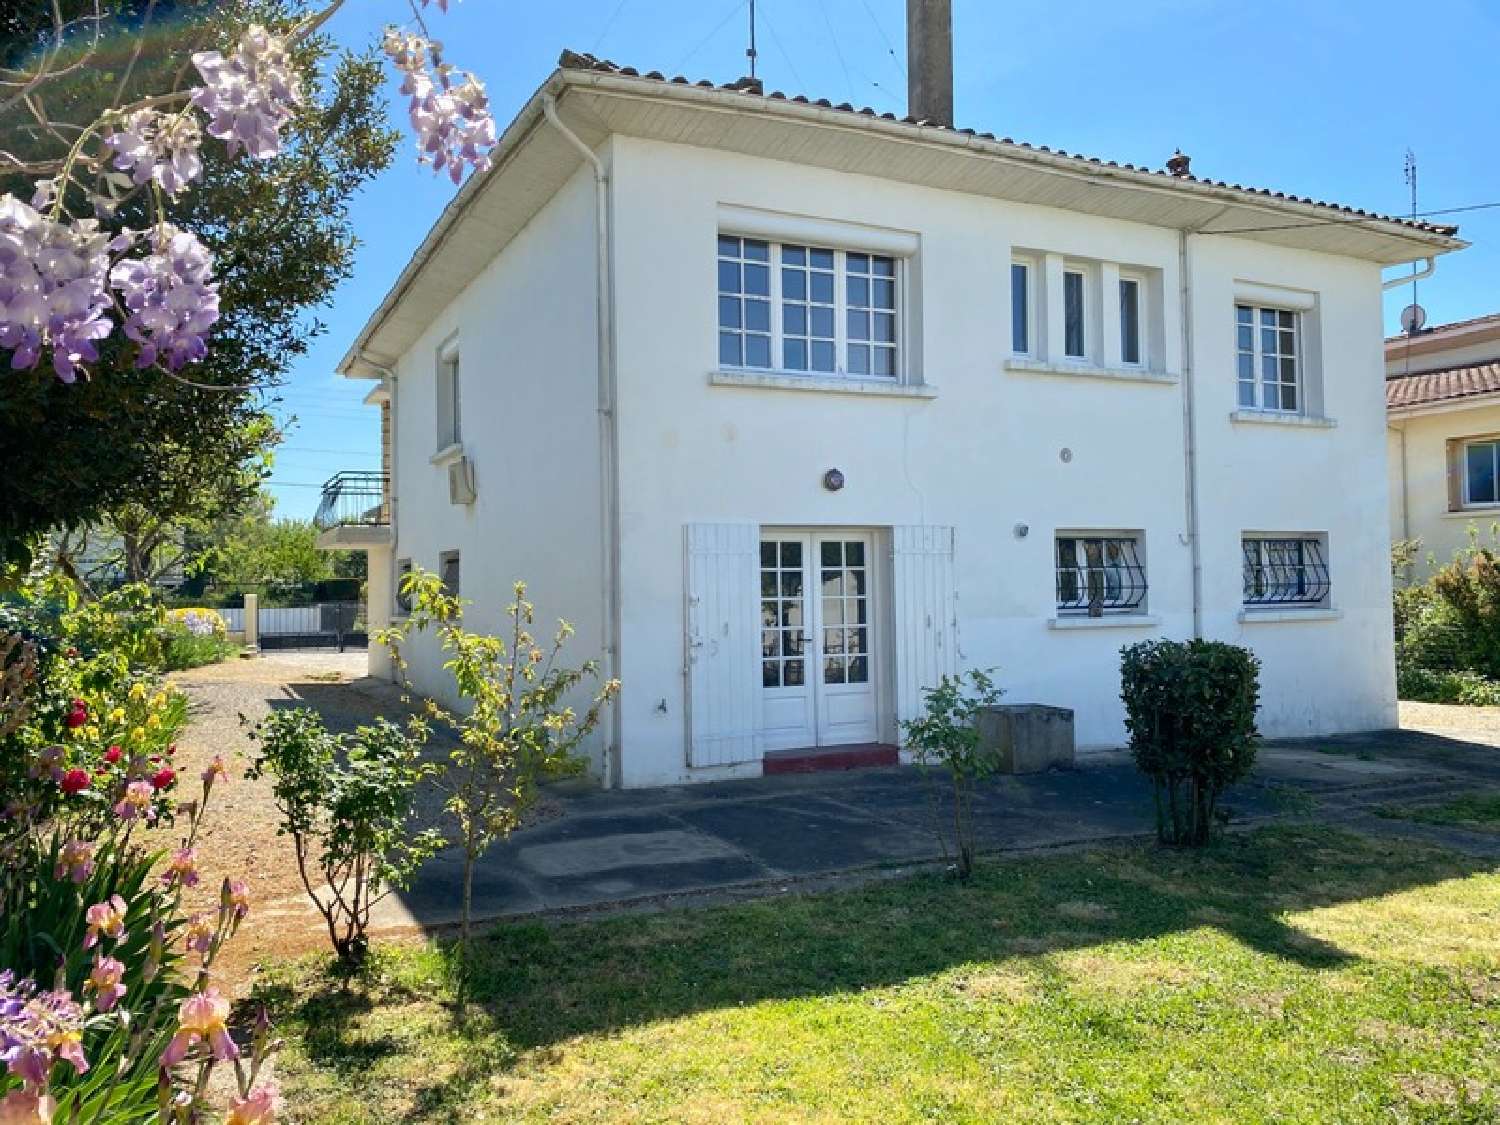  à vendre maison Bergerac Dordogne 4